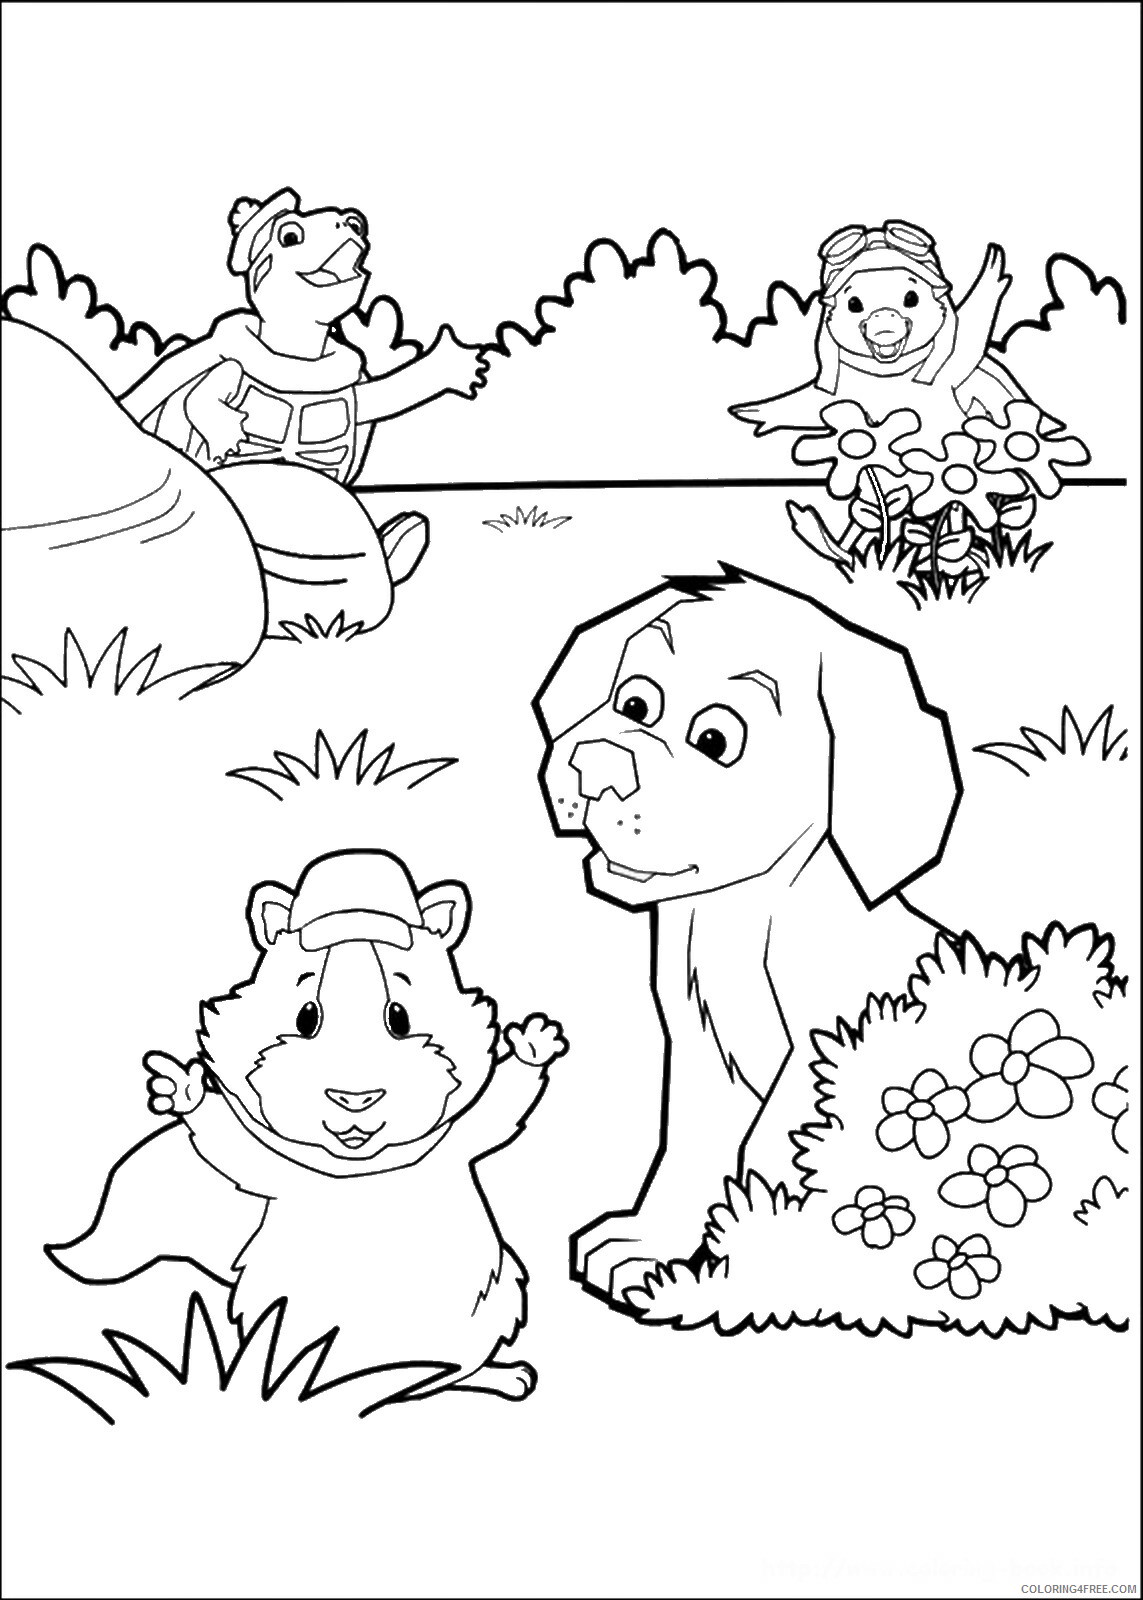 Wonder Pets Coloring Pages TV Film wonderpets_cl_06 Printable 2020 11703 Coloring4free